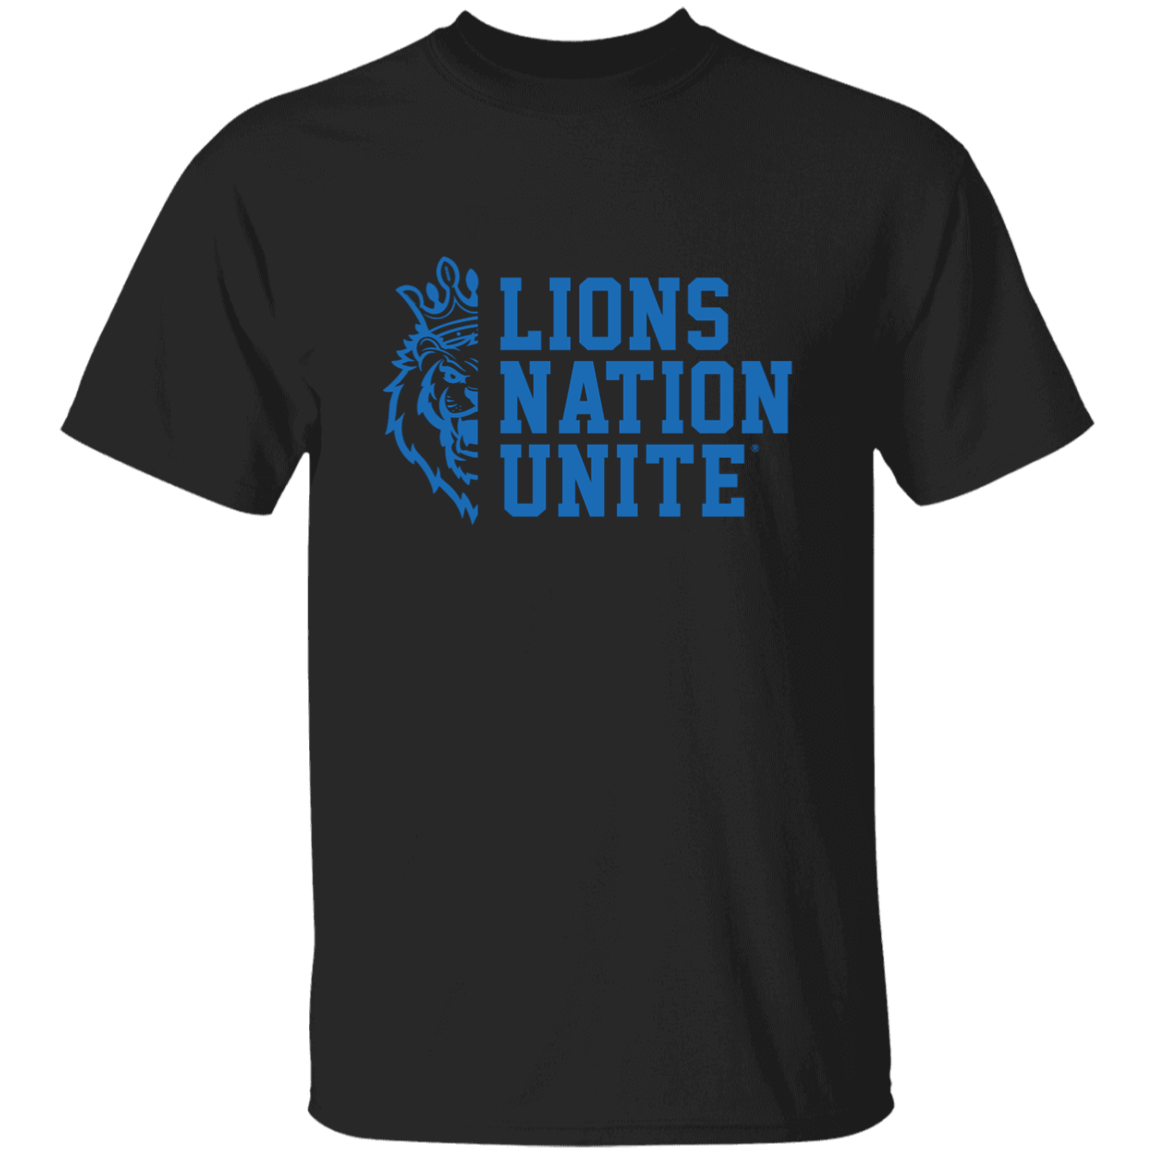 Lions Nation Unite - G500 5.3 oz. T-Shirt